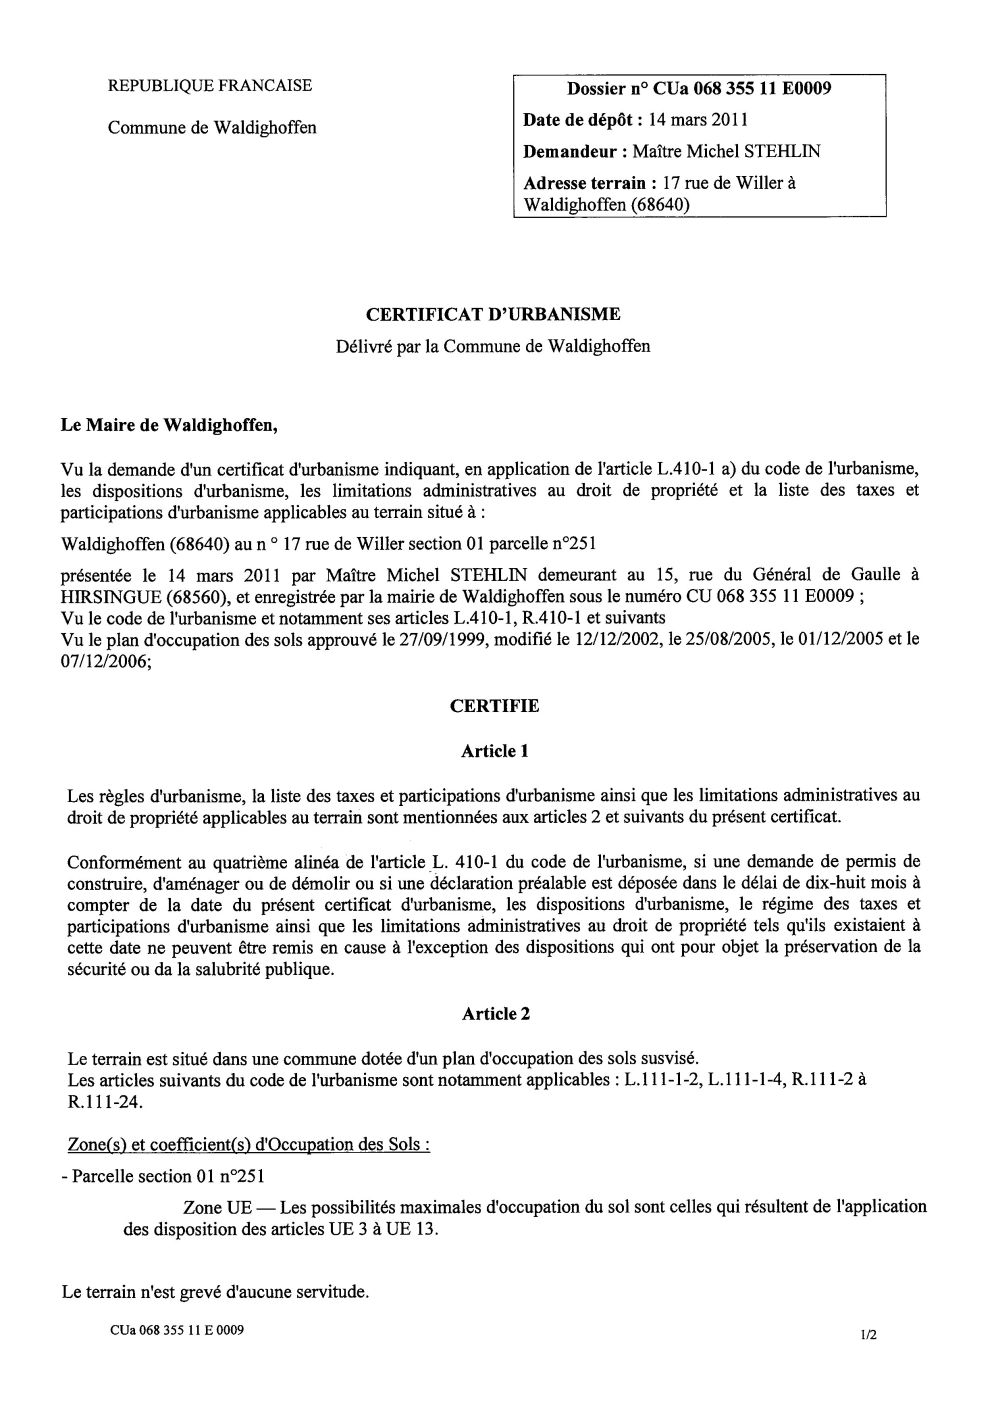 Certificat d'urbanisme n°11E0009 - Me Michel STEHLIN